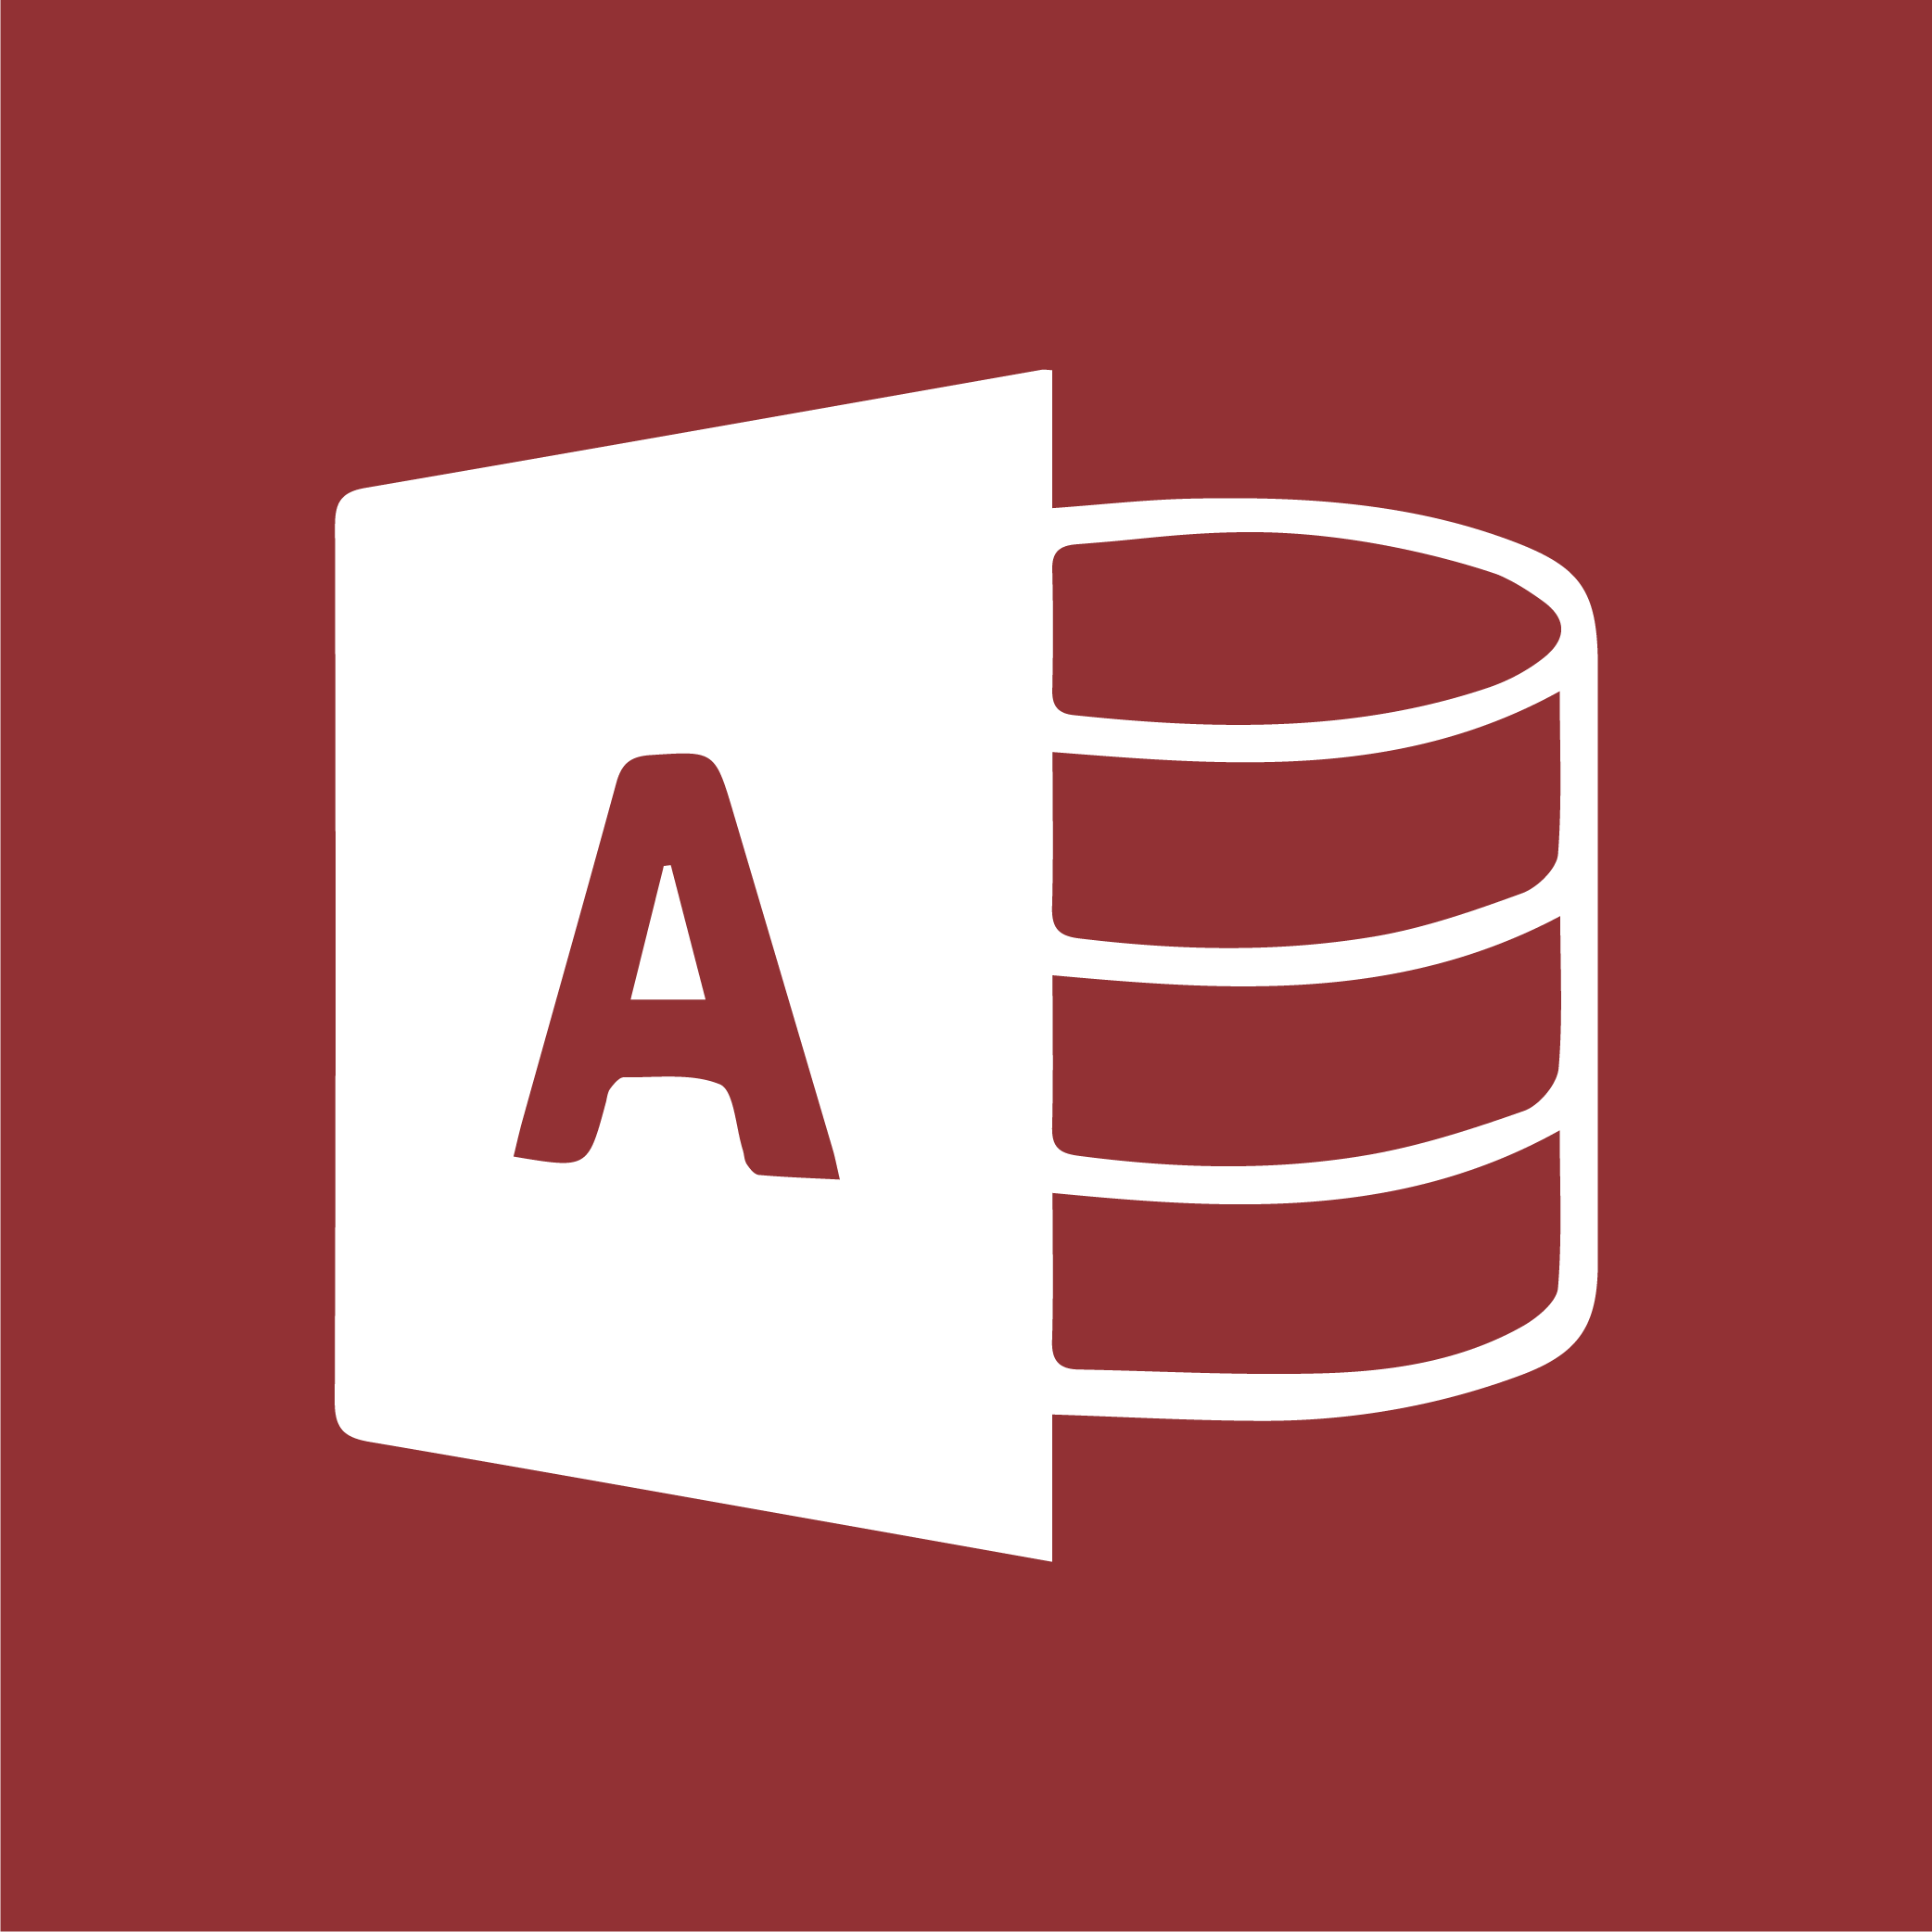 Access 32. Иконка MS access. MS access ярлык. Базы данных access логотип. Microsoft access картинки.